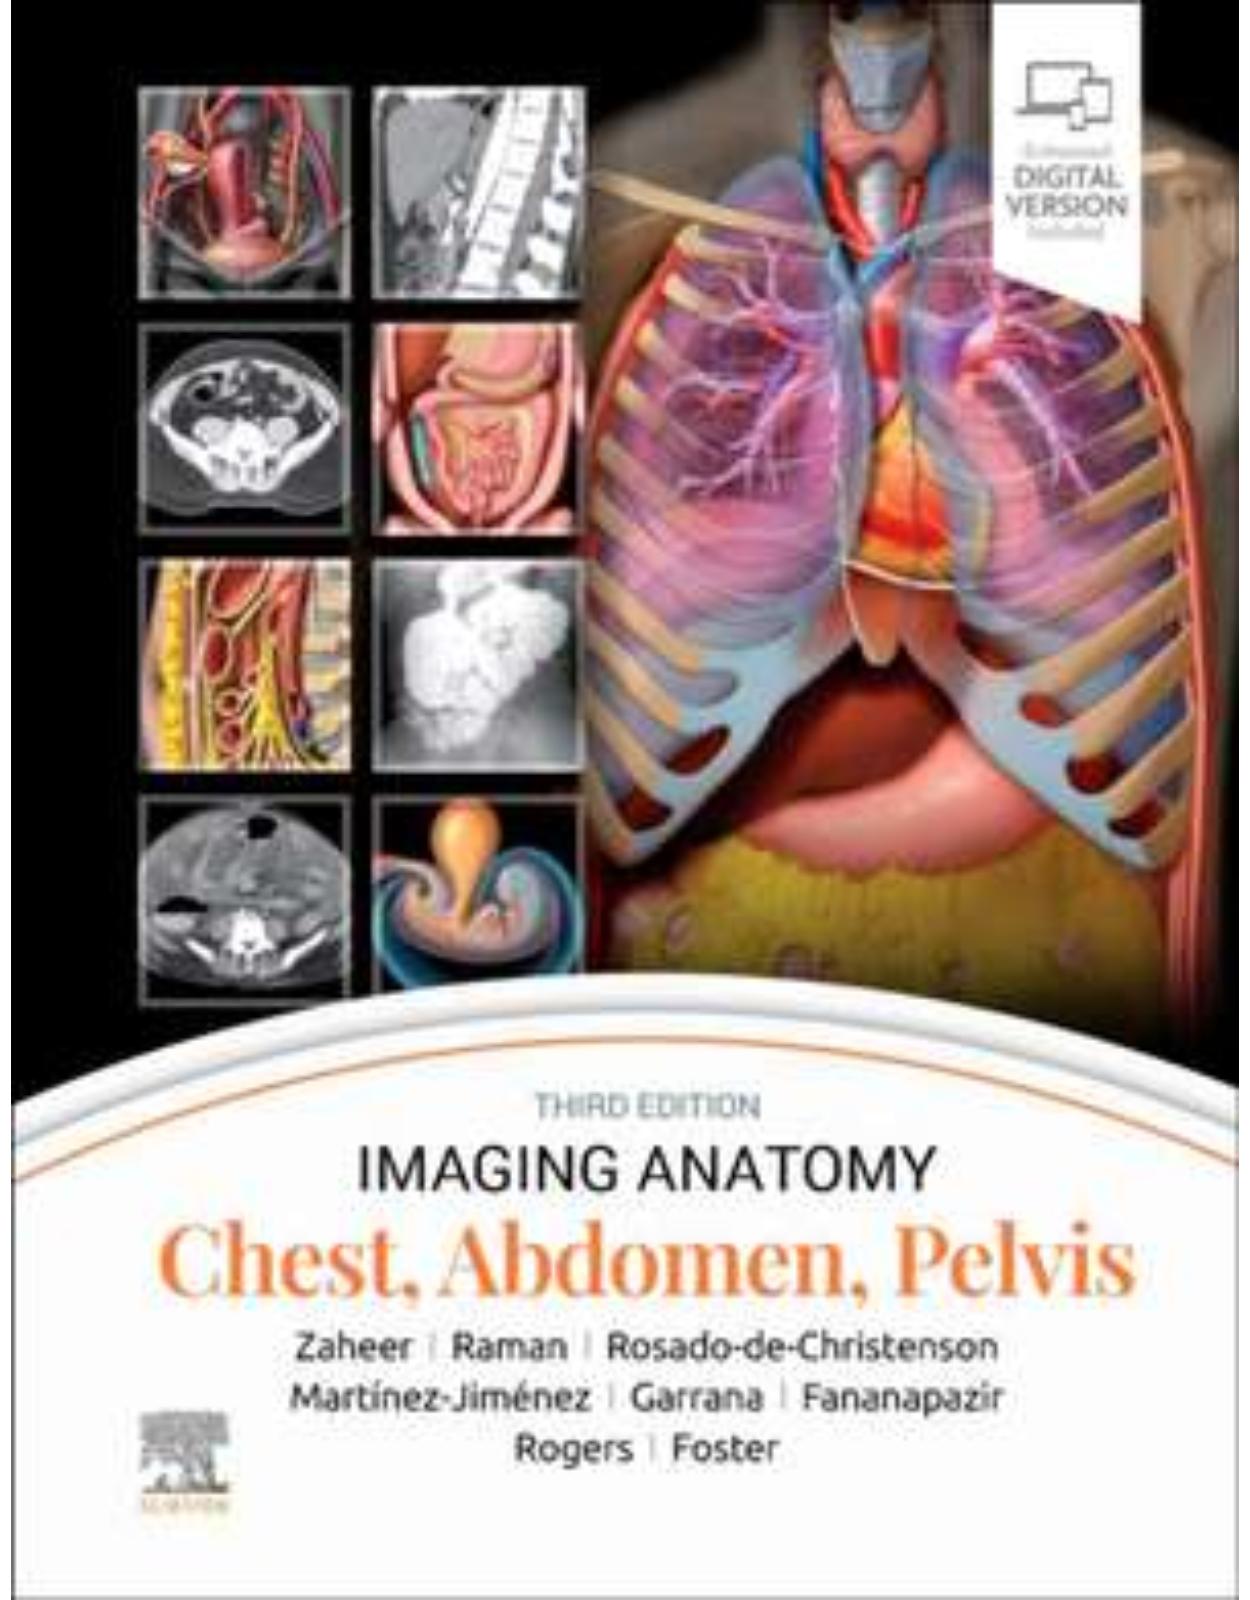 Imaging Anatomy: Chest, Abdomen, Pelvis